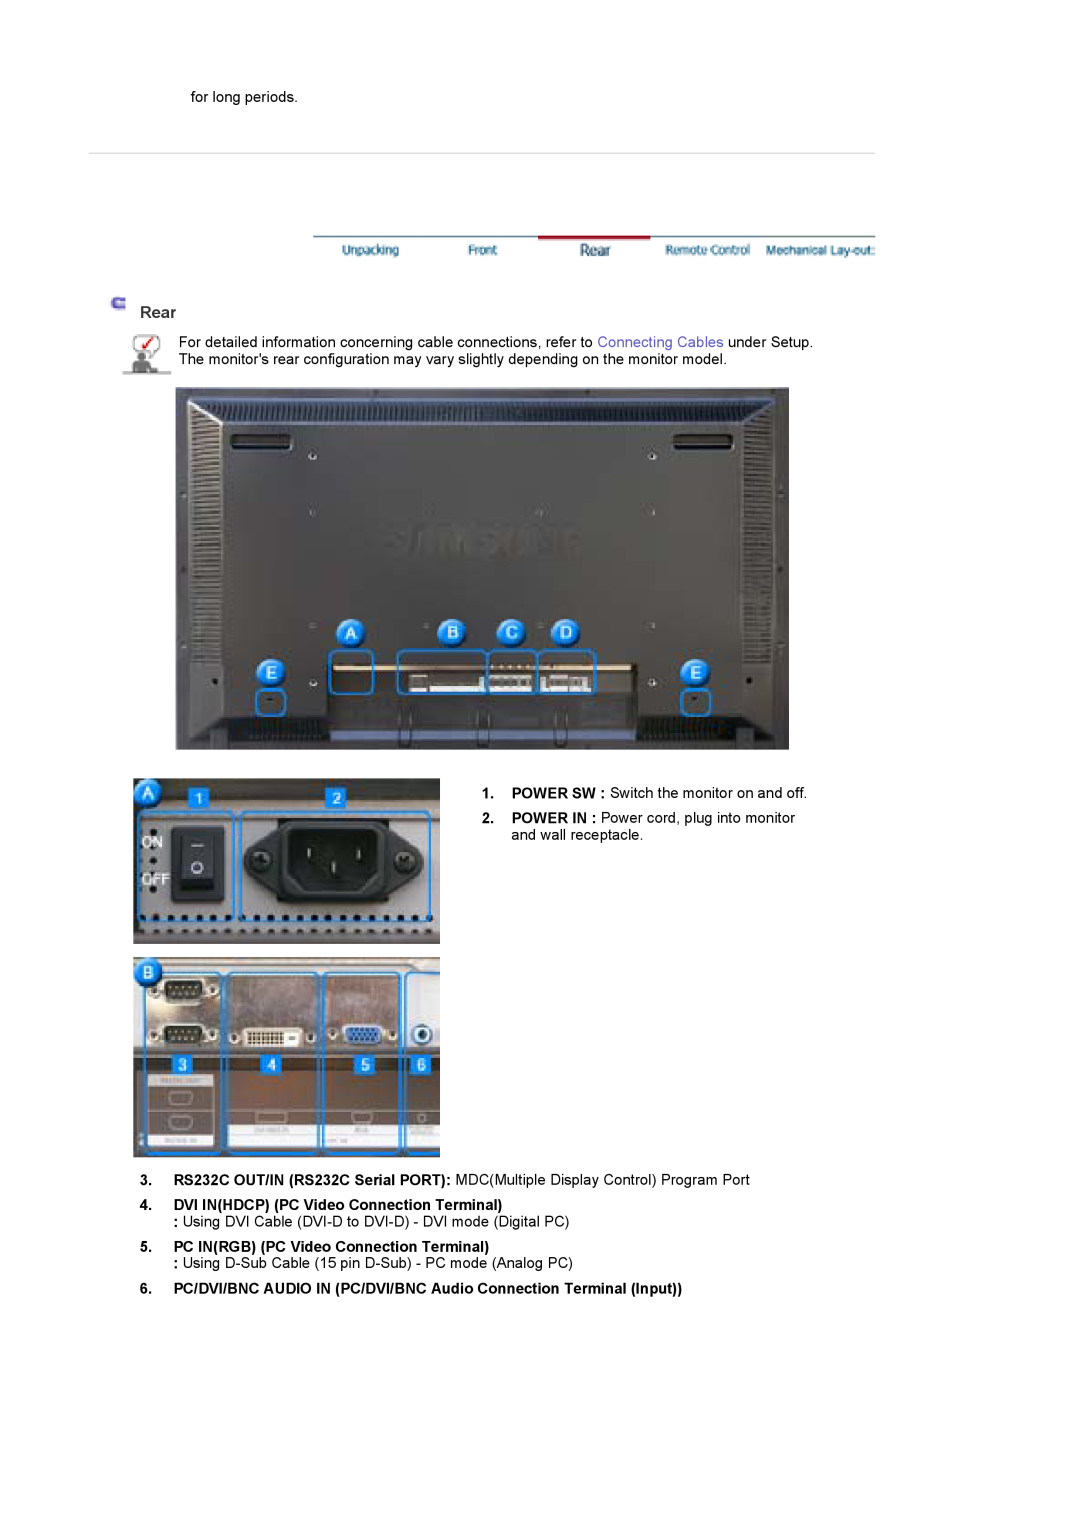 Samsung 400Pn, 400P manual Rear, DVI INHDCP PC Video Connection Terminal, PC INRGB PC Video Connection Terminal 